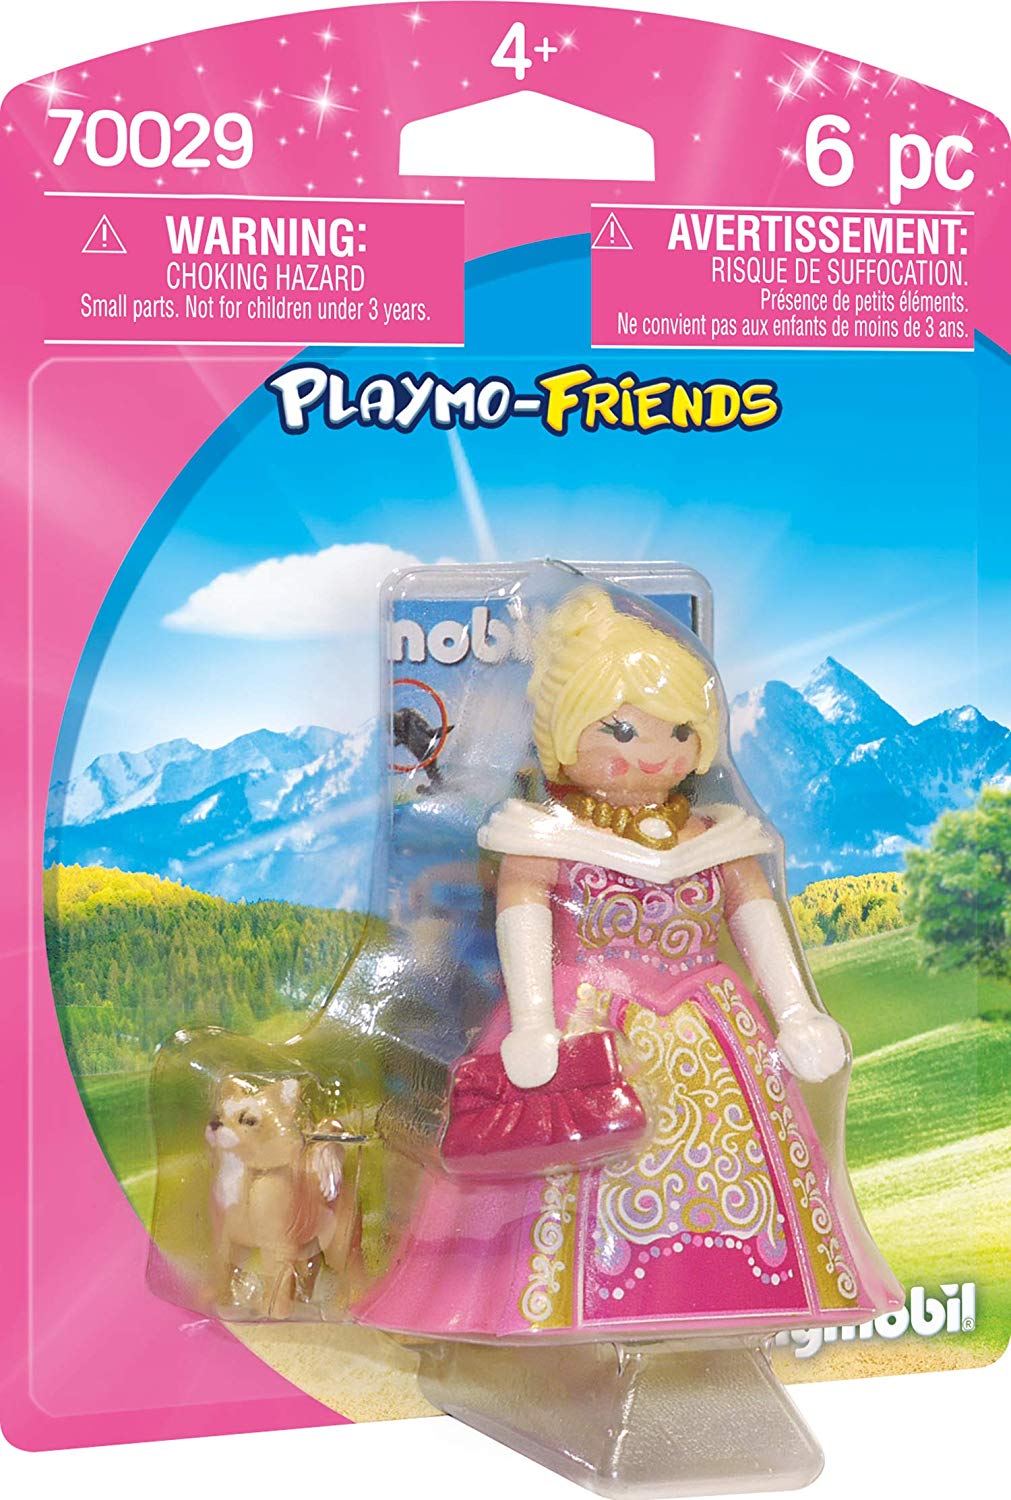 Playmobil 70029 Playmo-Friends Princess Colourful